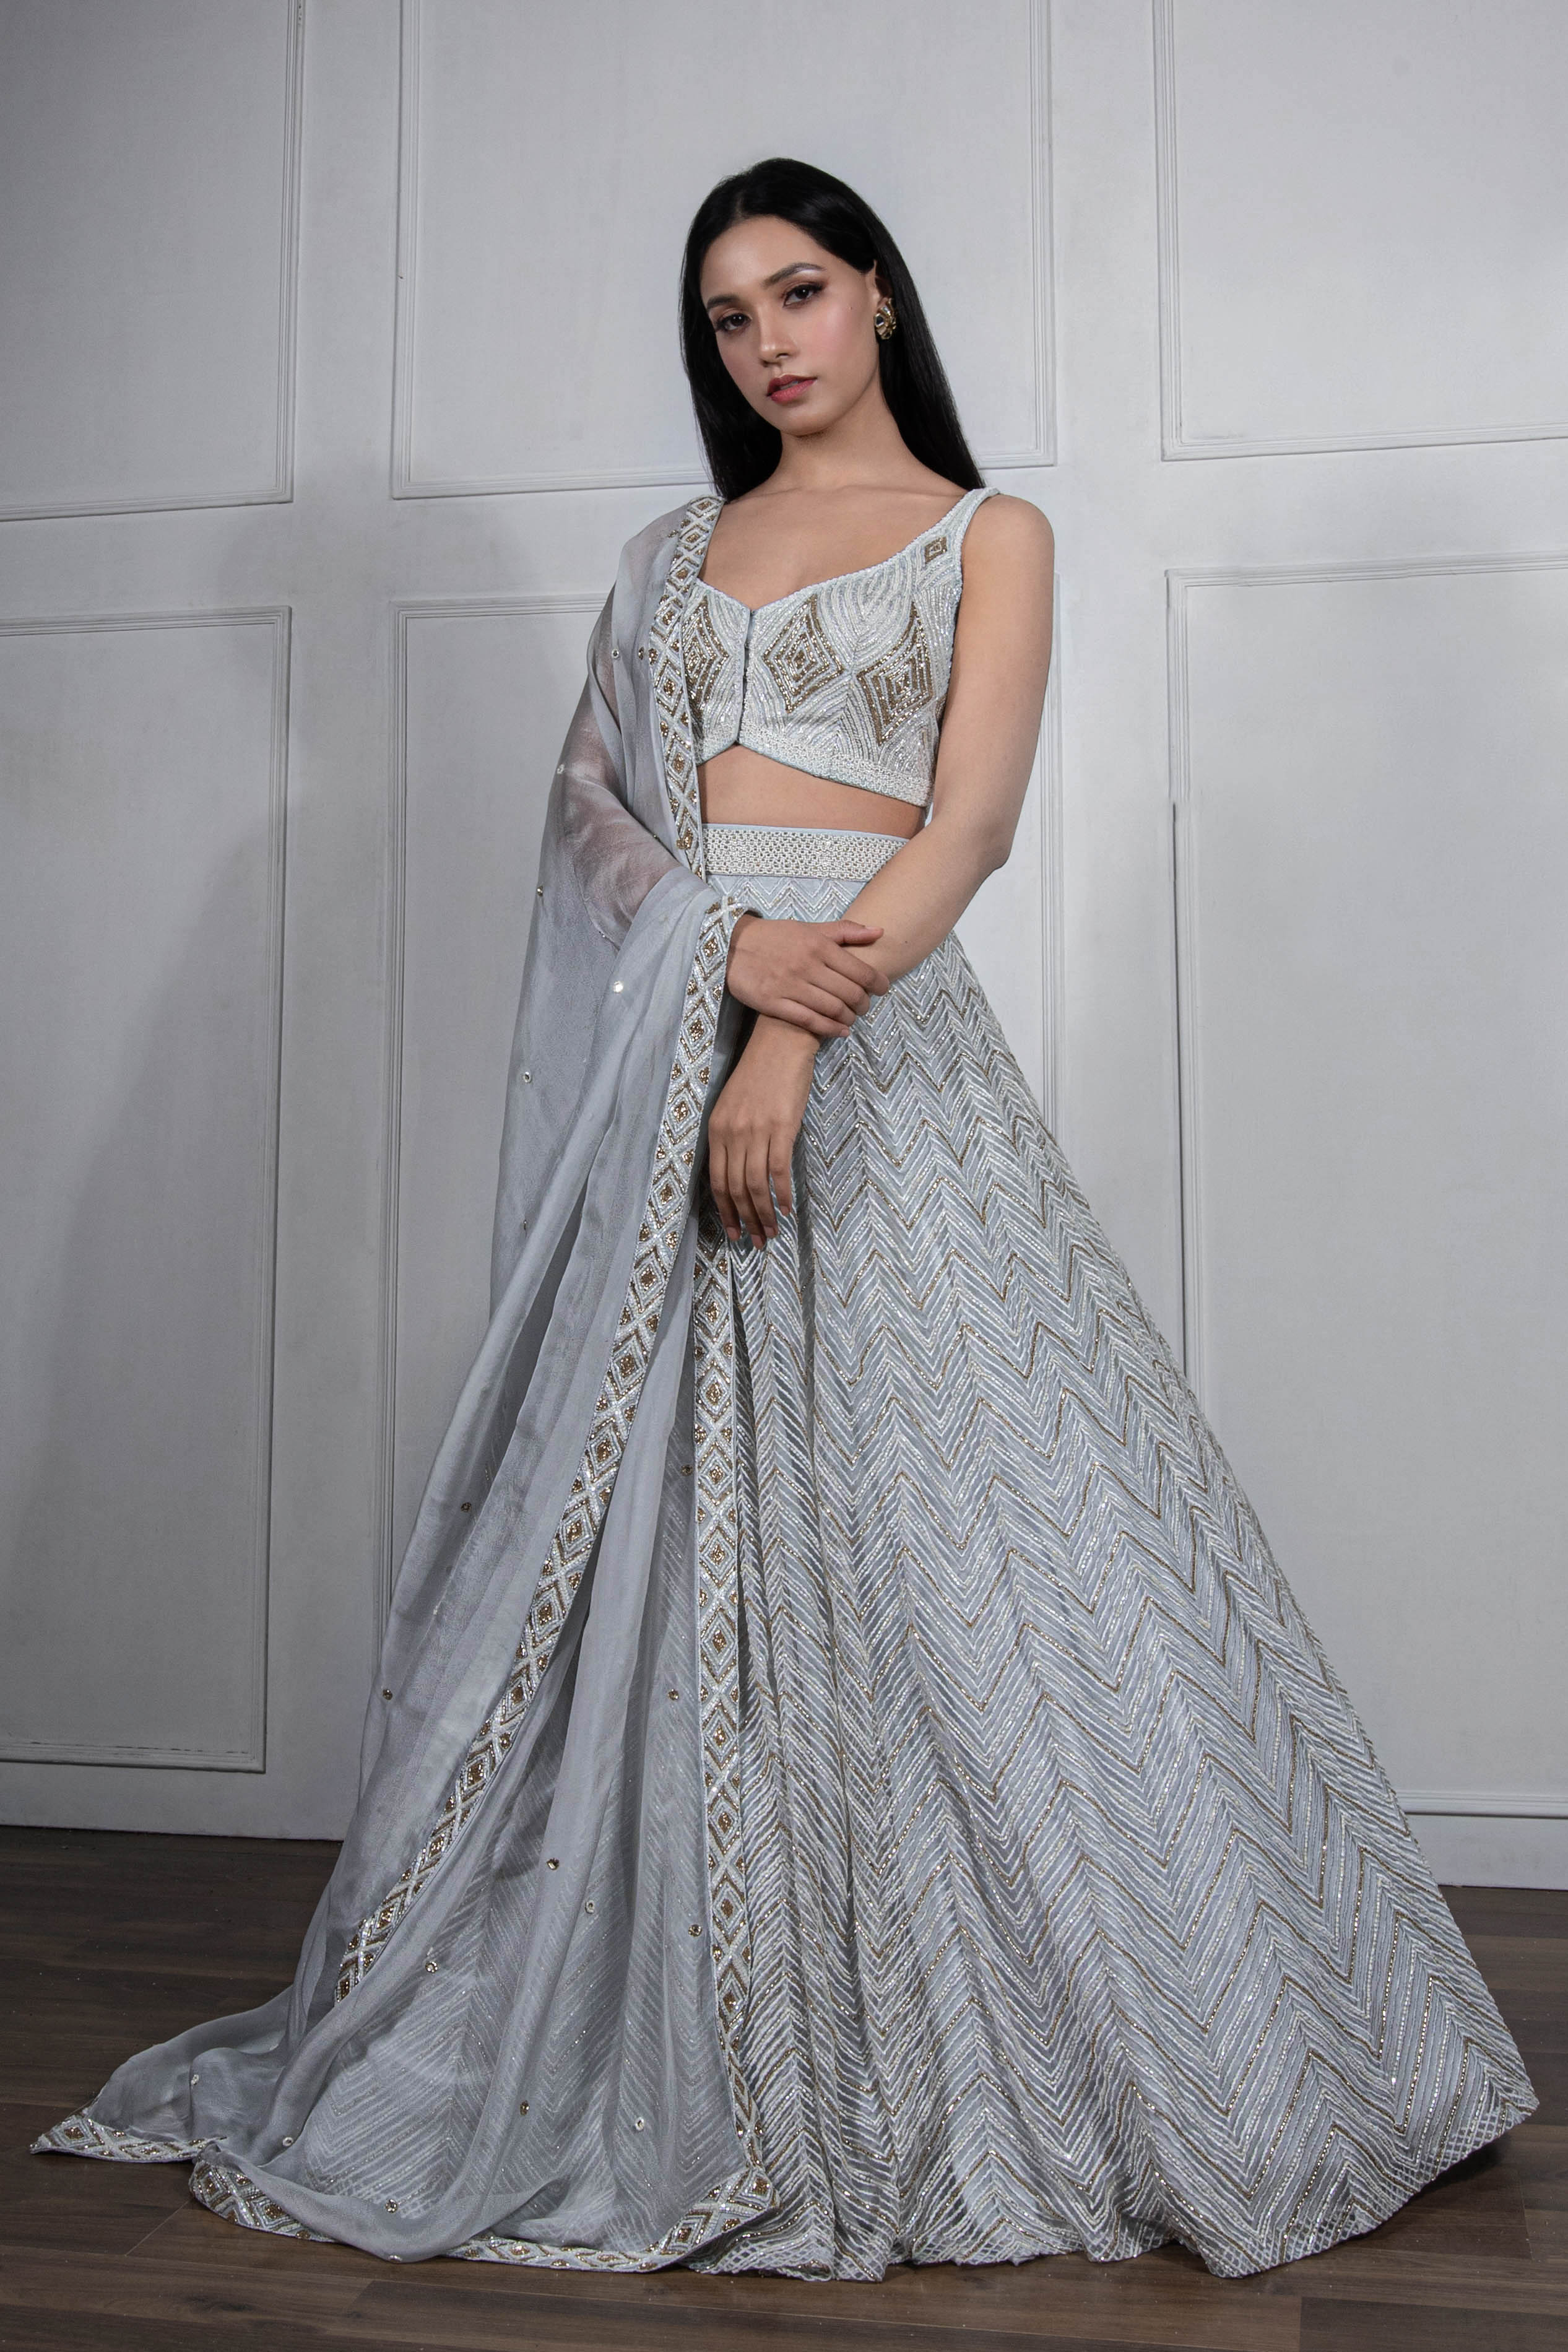 Shrena Hirawat | Shimmer dress, Shimmer lehenga, Silver blouse